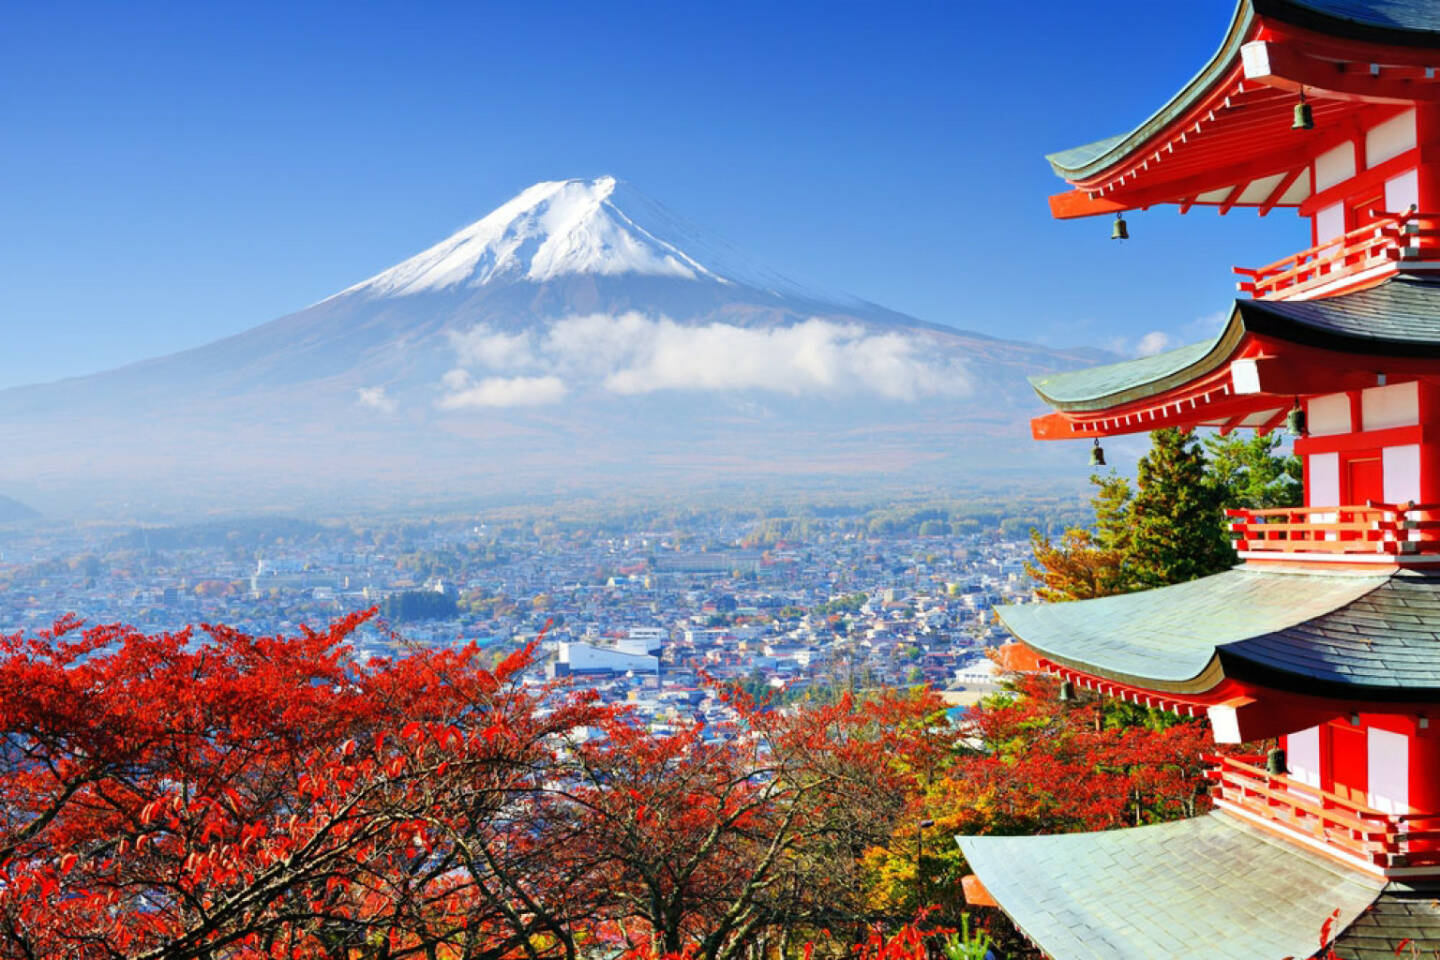 Mount Fuji, Japan, http://www.shutterstock.com/de/pic-147744140/stock-photo-mt-fuji-with-fall-colors-in-japan.html 